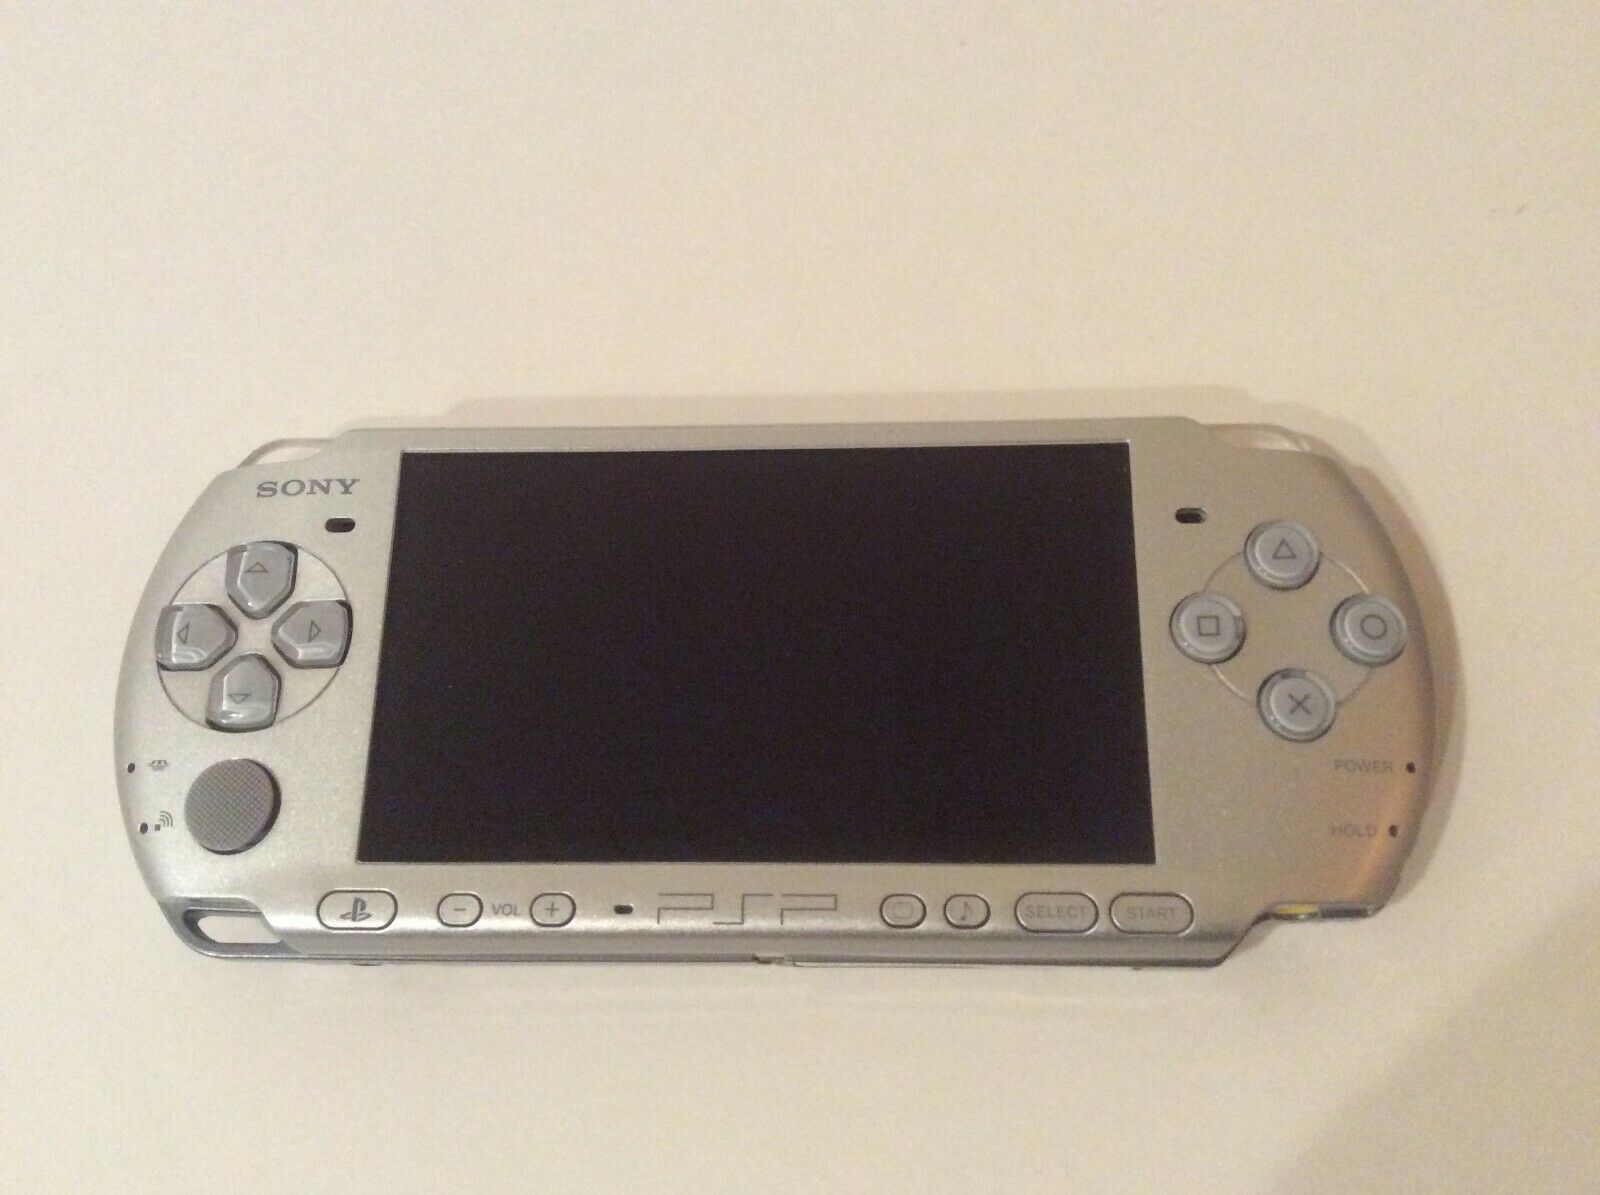 Psp vk. PSP Sony PSP 2000. Сони ПСП 2000. PSP Sony 2000 игровая консоль. Sony PSP E 2008.